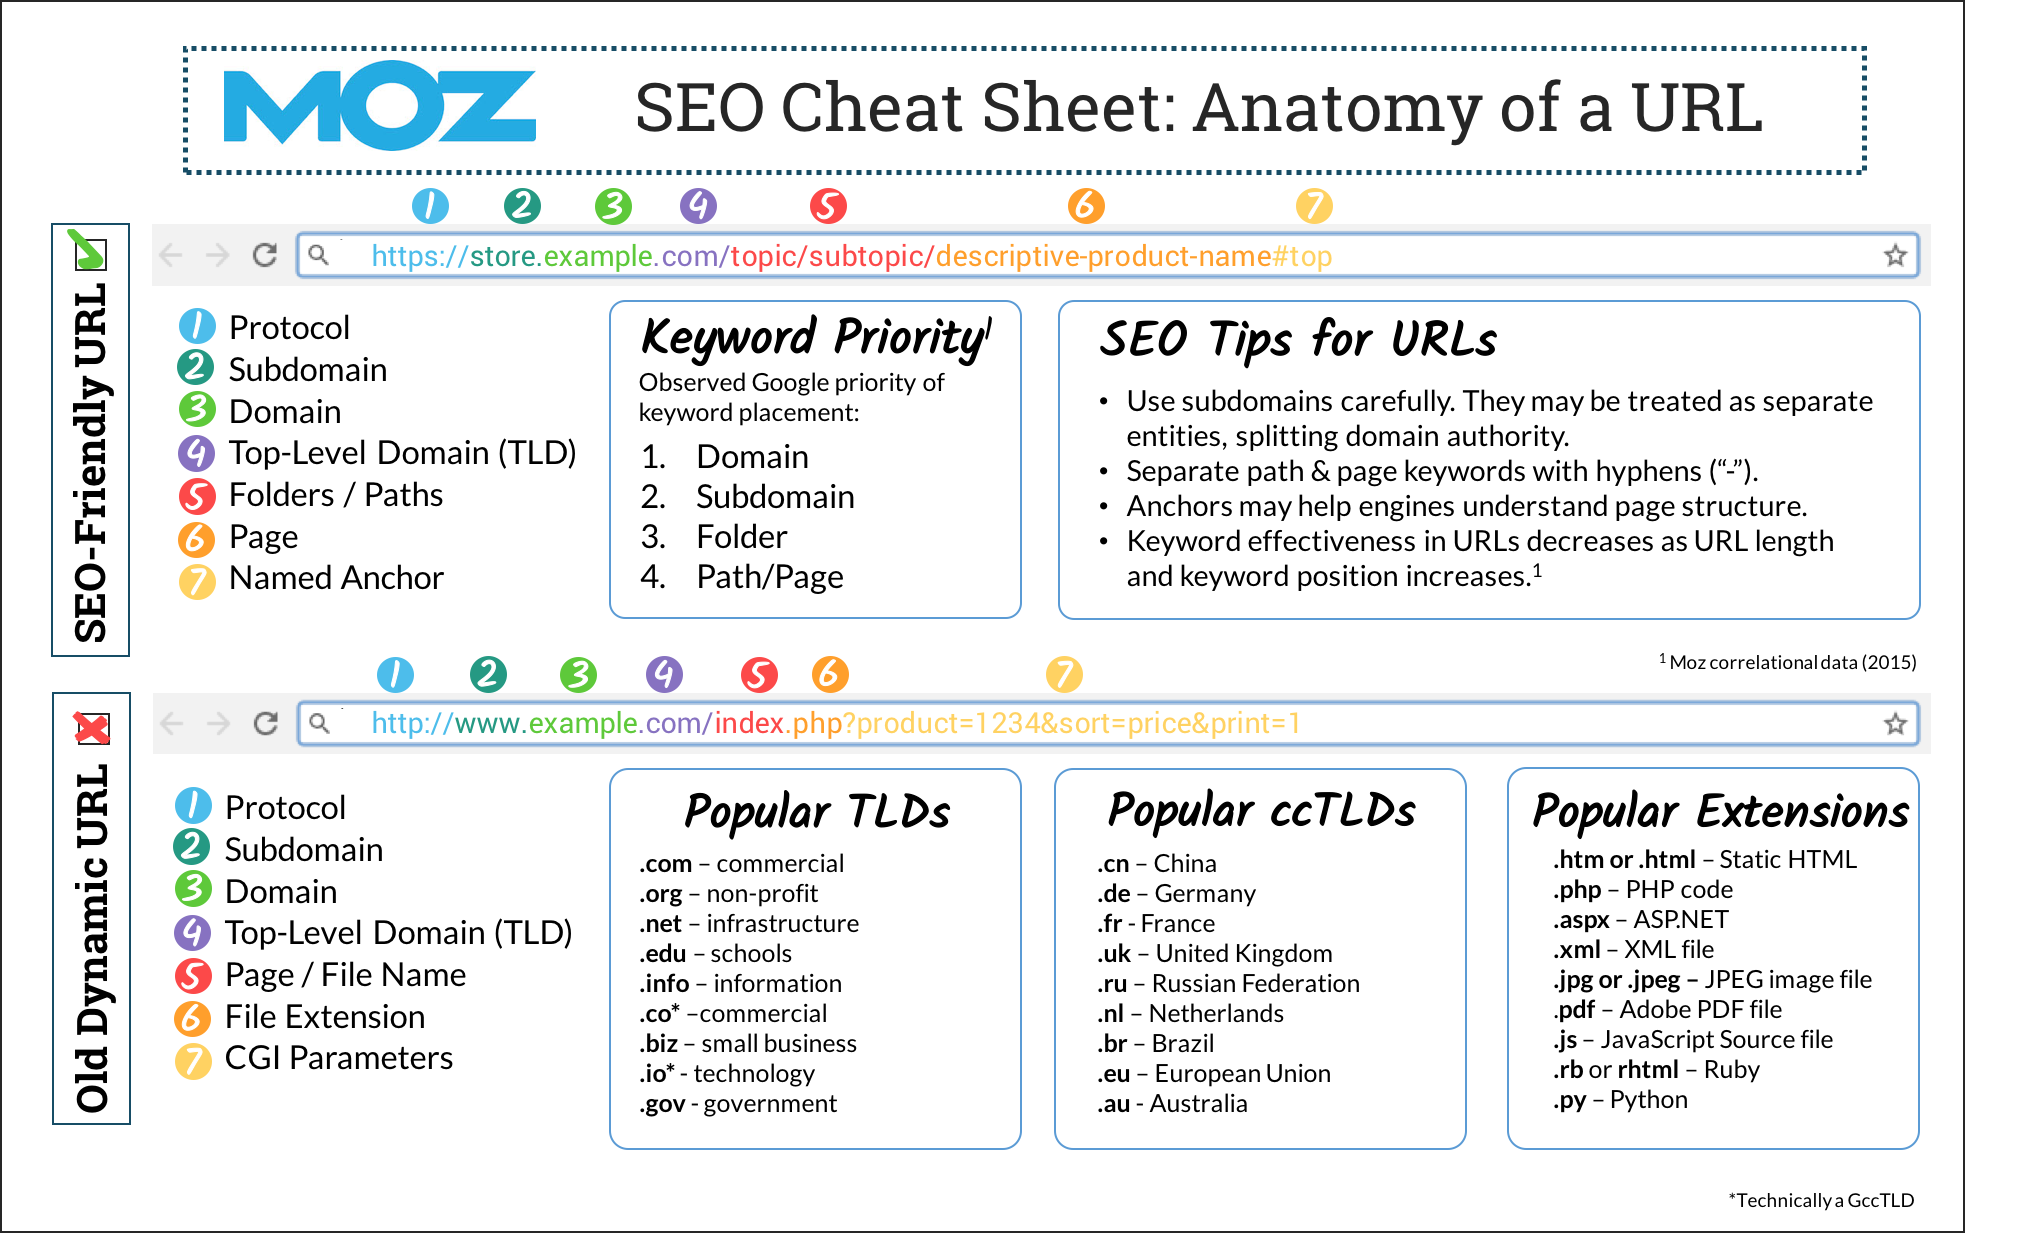 Anatomy of a URL Cheat Sheet